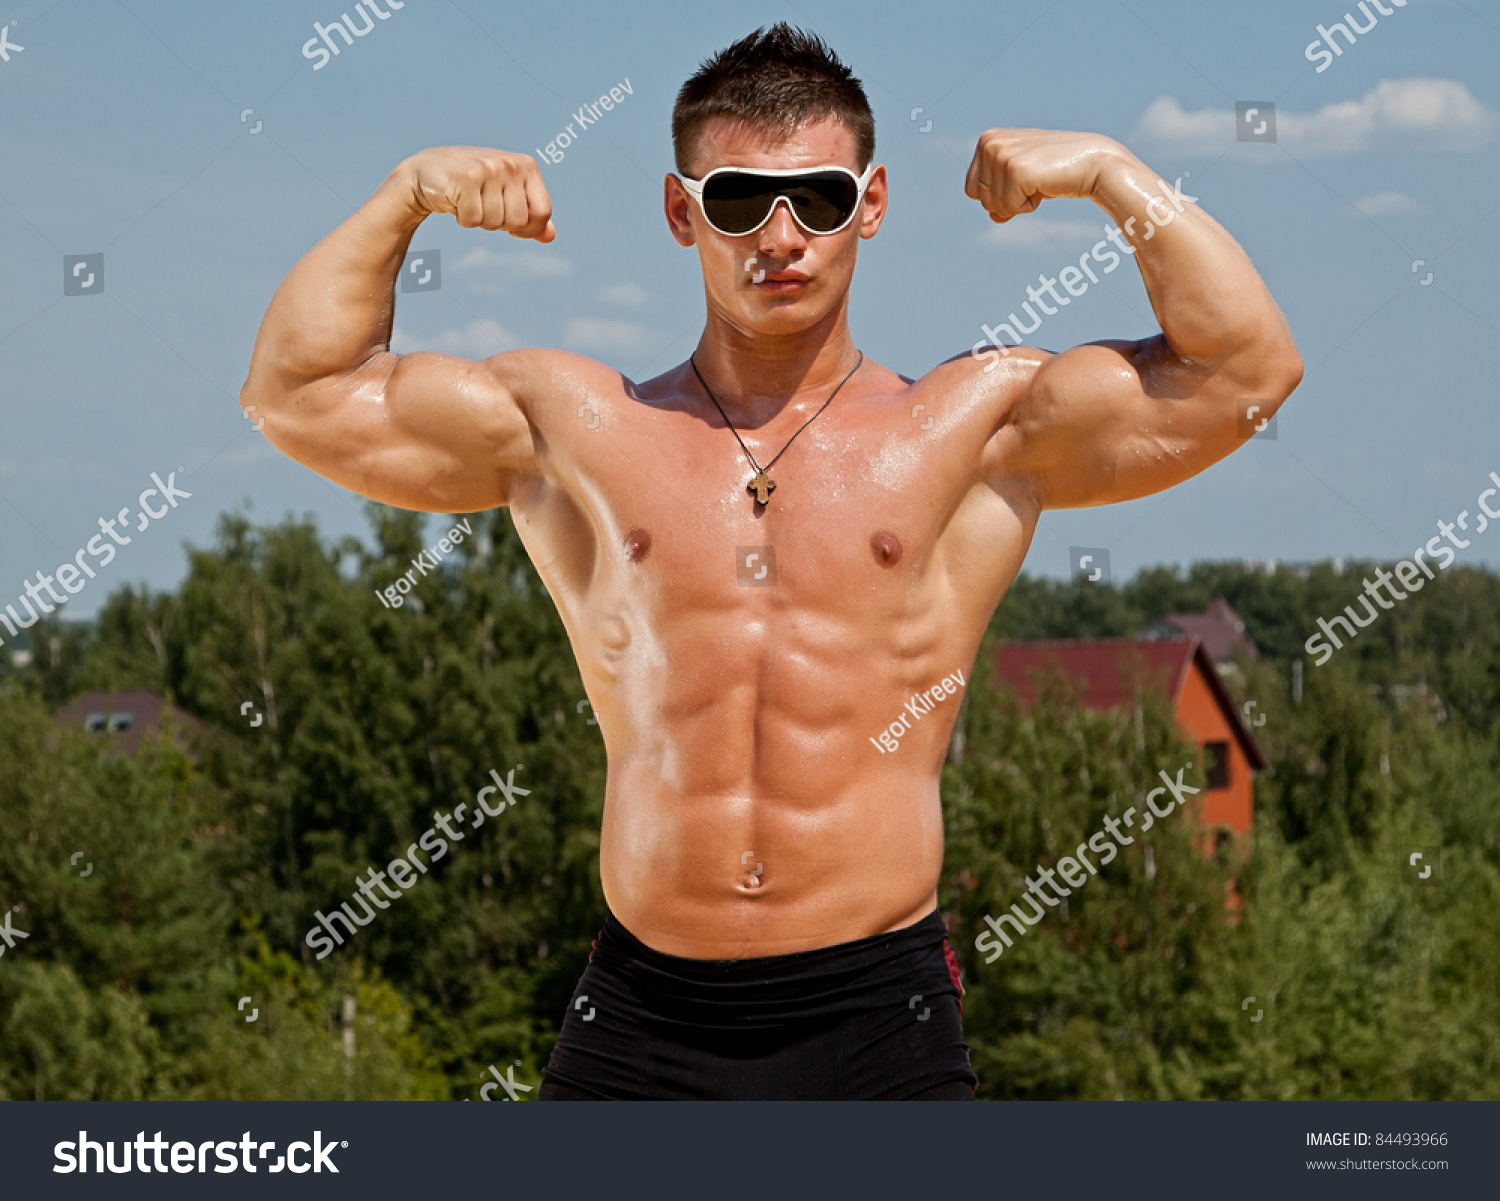 Image Of Muscle Man Posing In Studio Stock Photo - Image 